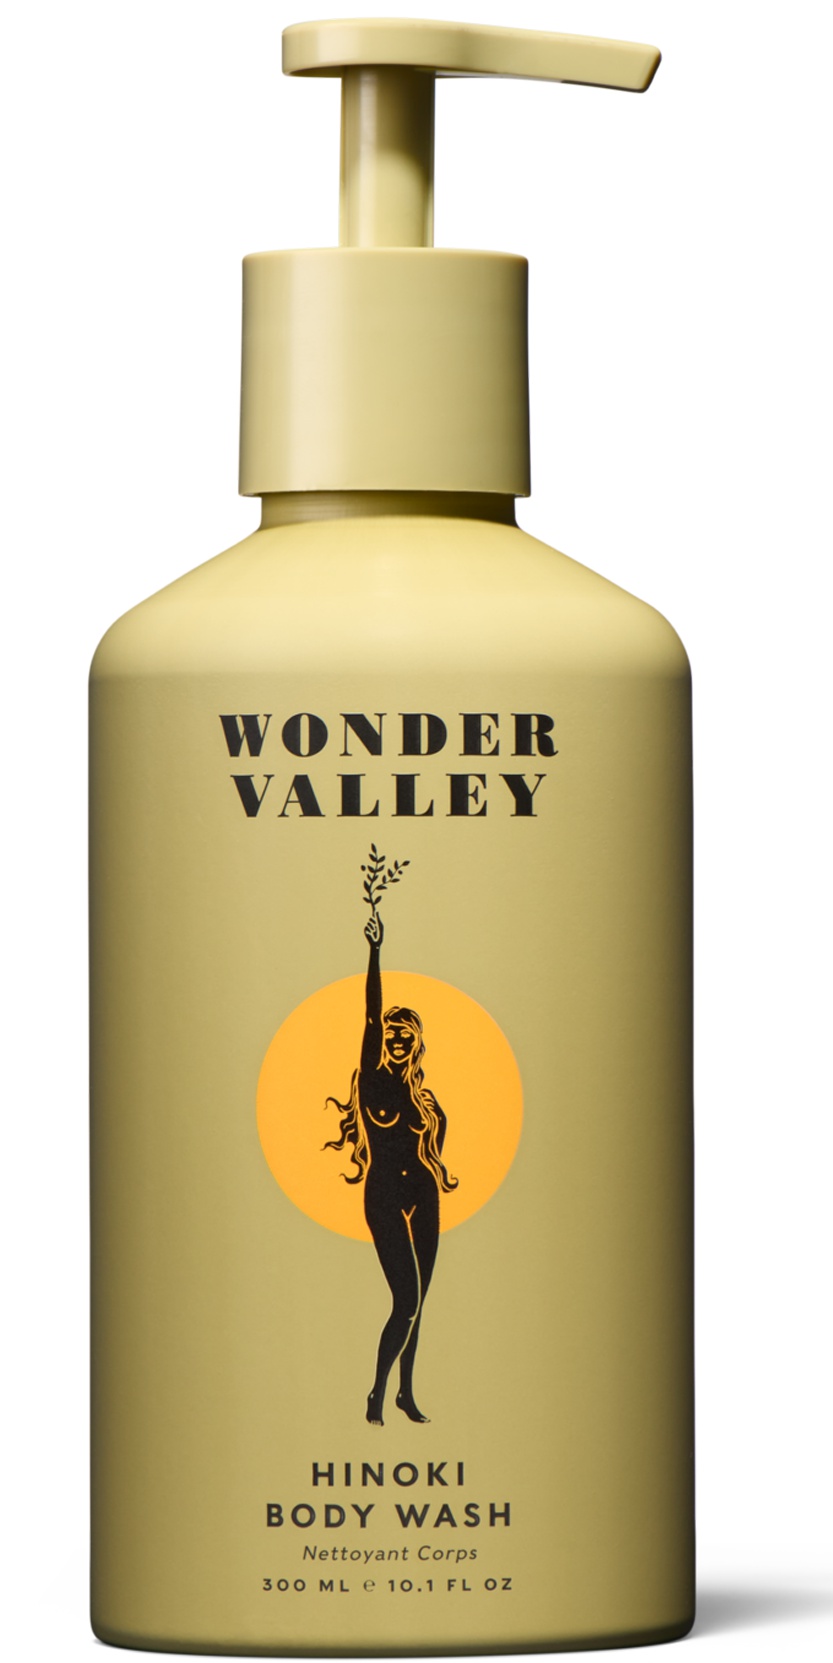 Wonder Valley Hinoki Body Wash